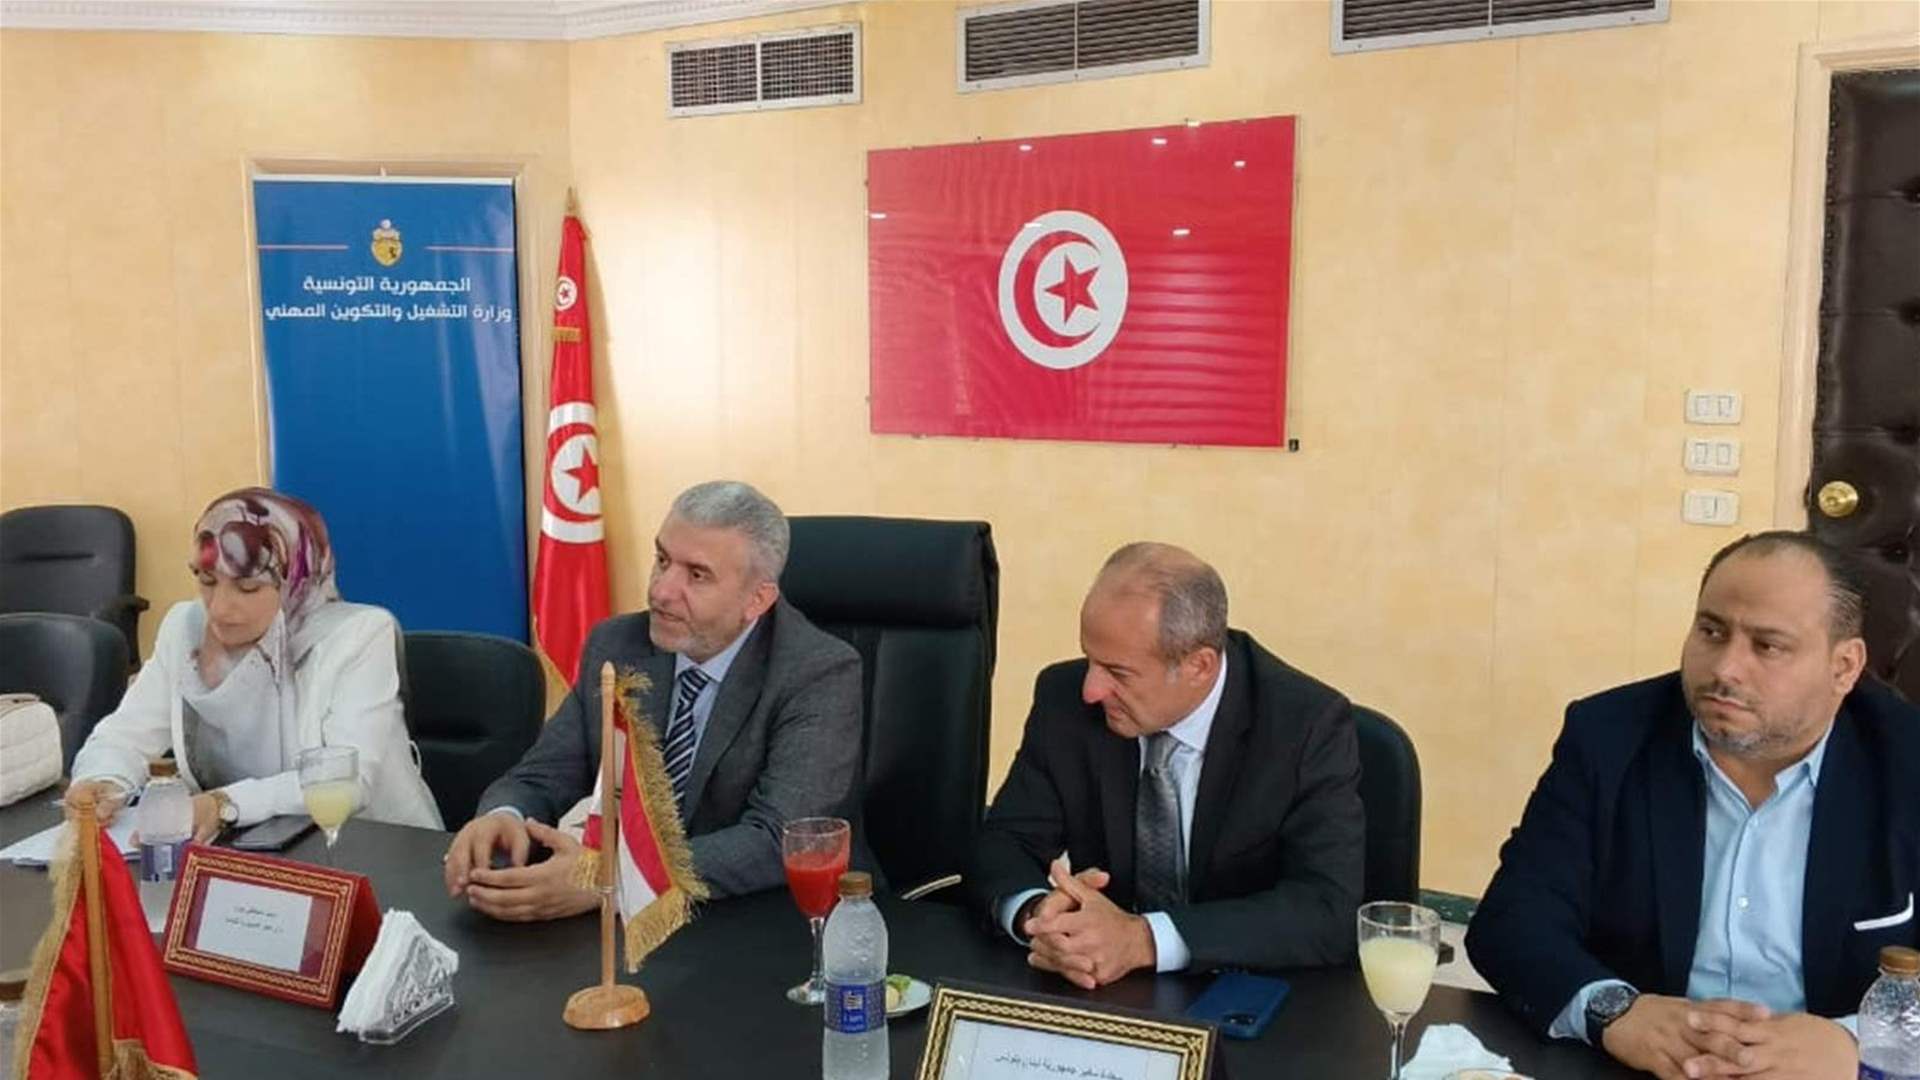 Enhancing Lebanese-Tunisian cooperation: Key meetings on vocational training and youth skills development